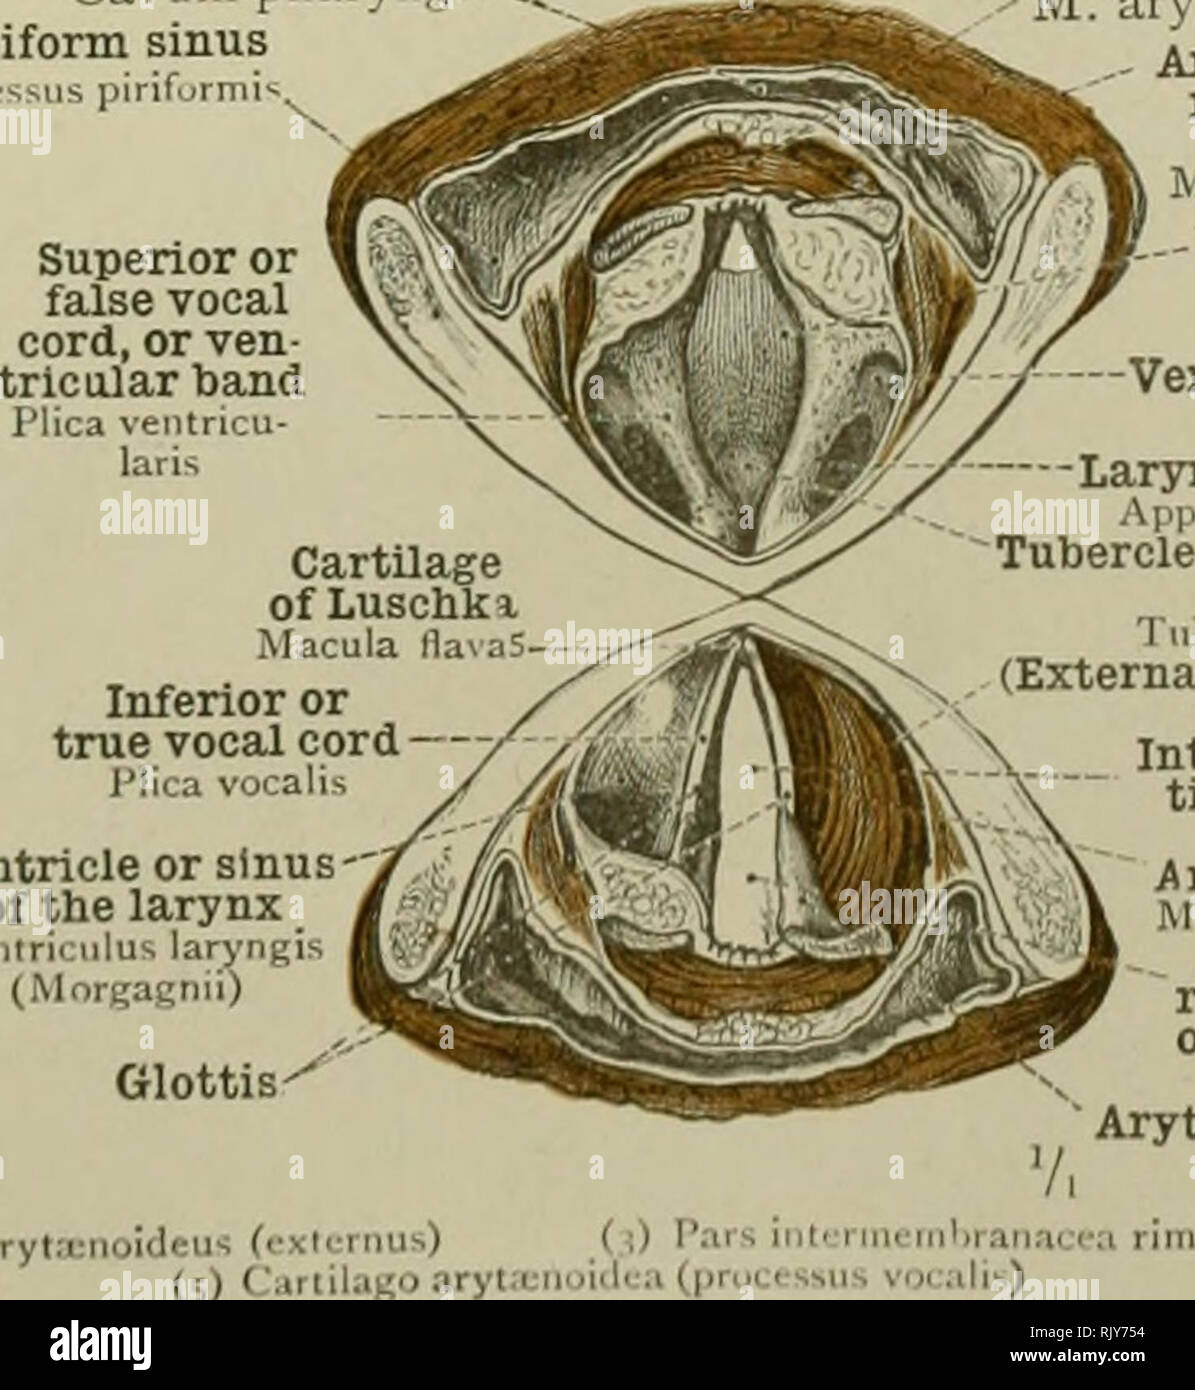 pyriform sinus anatomy